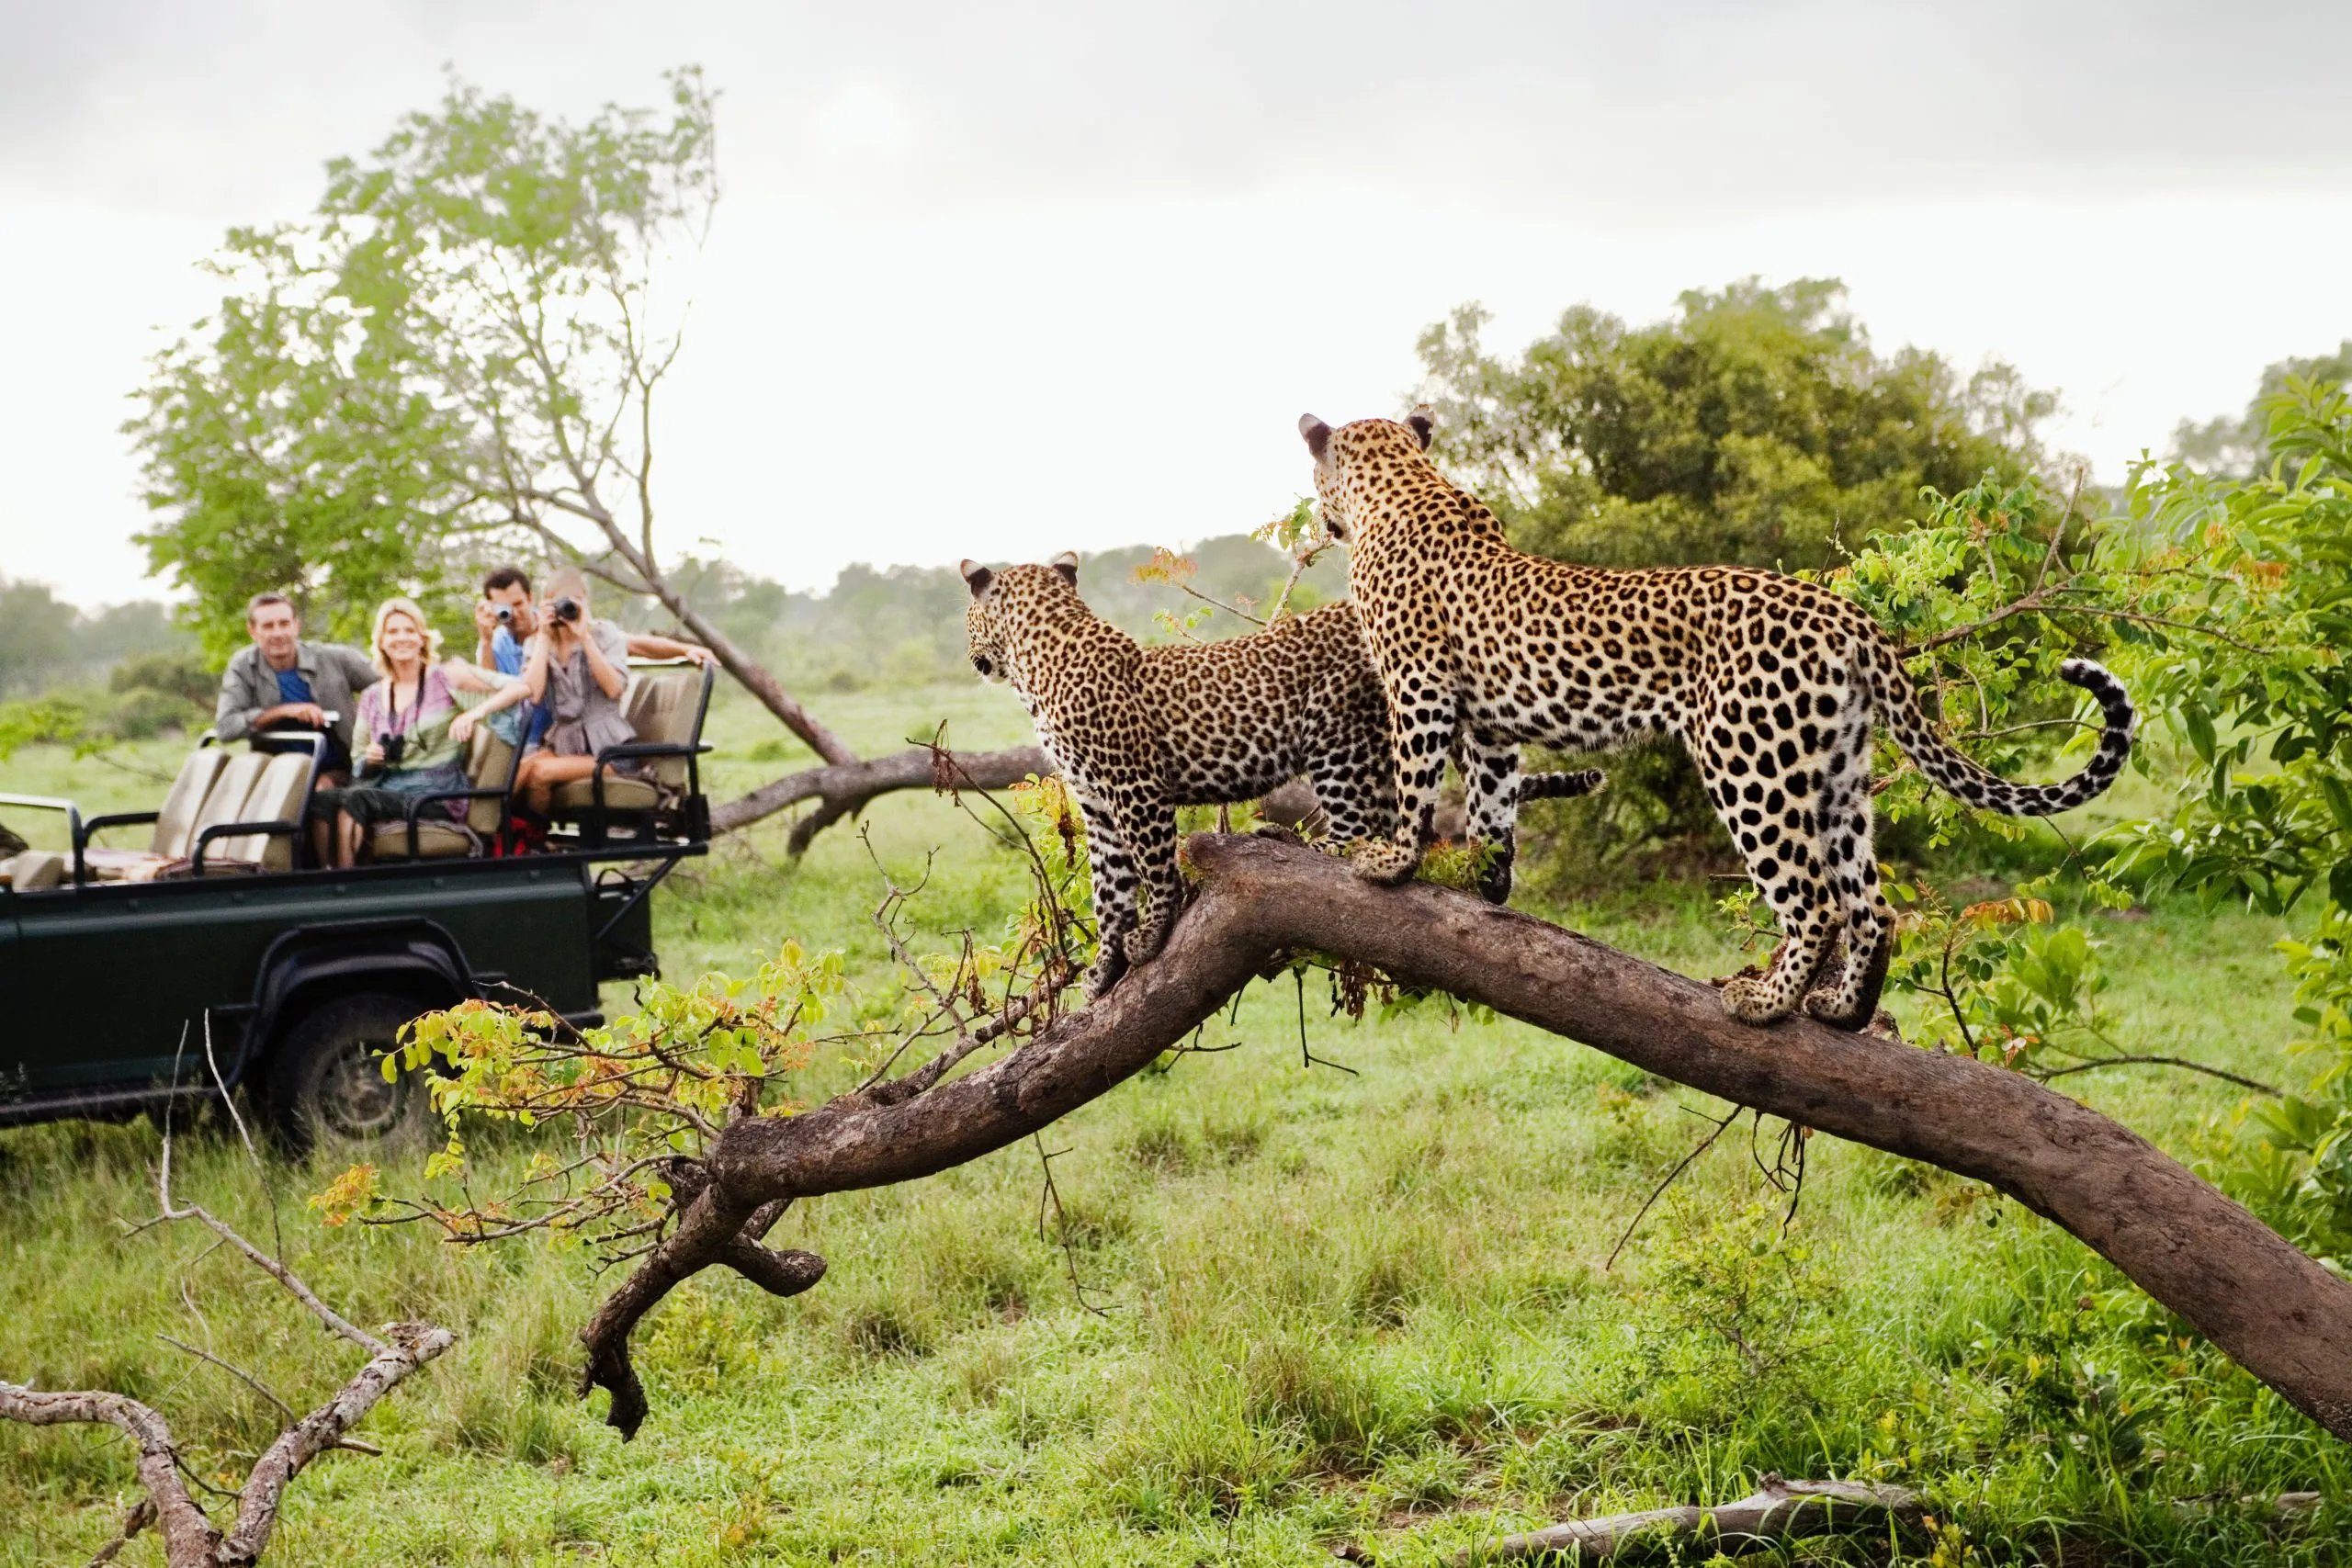 Dois leopardos numa árvore a observar turistas num jipe, vista traseira